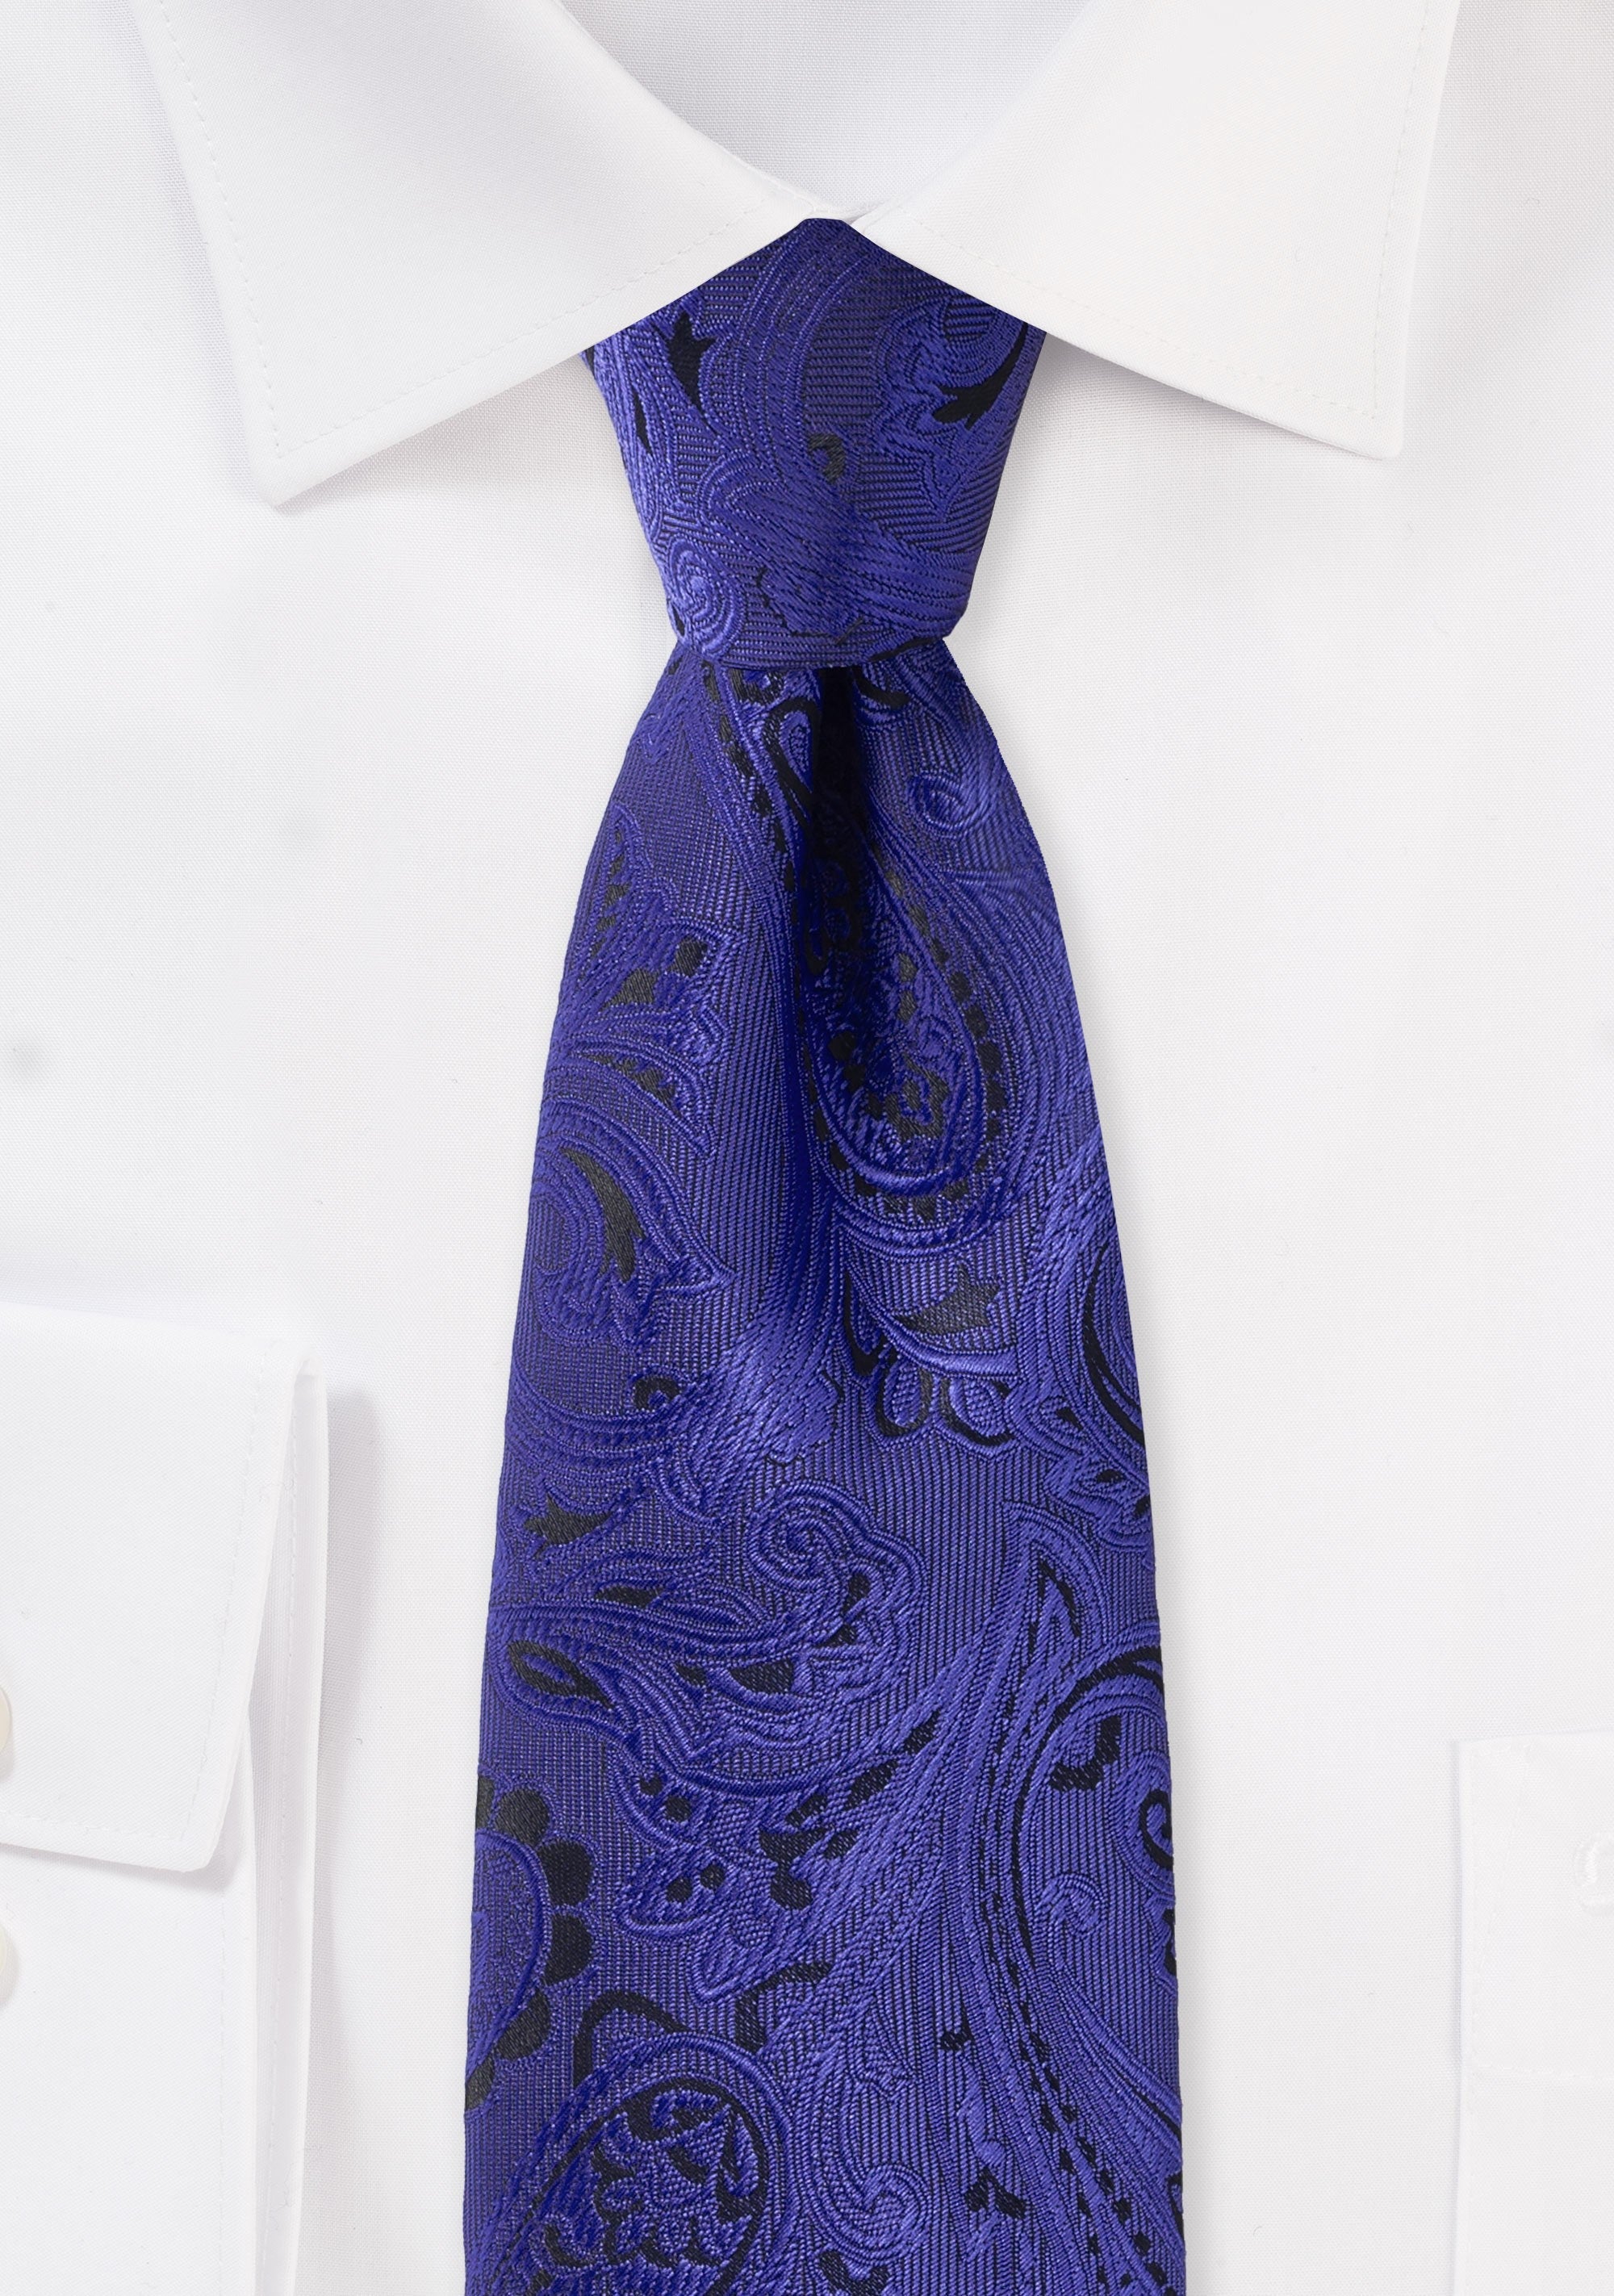 Ultra Marine Blue Proper Paisley Necktie